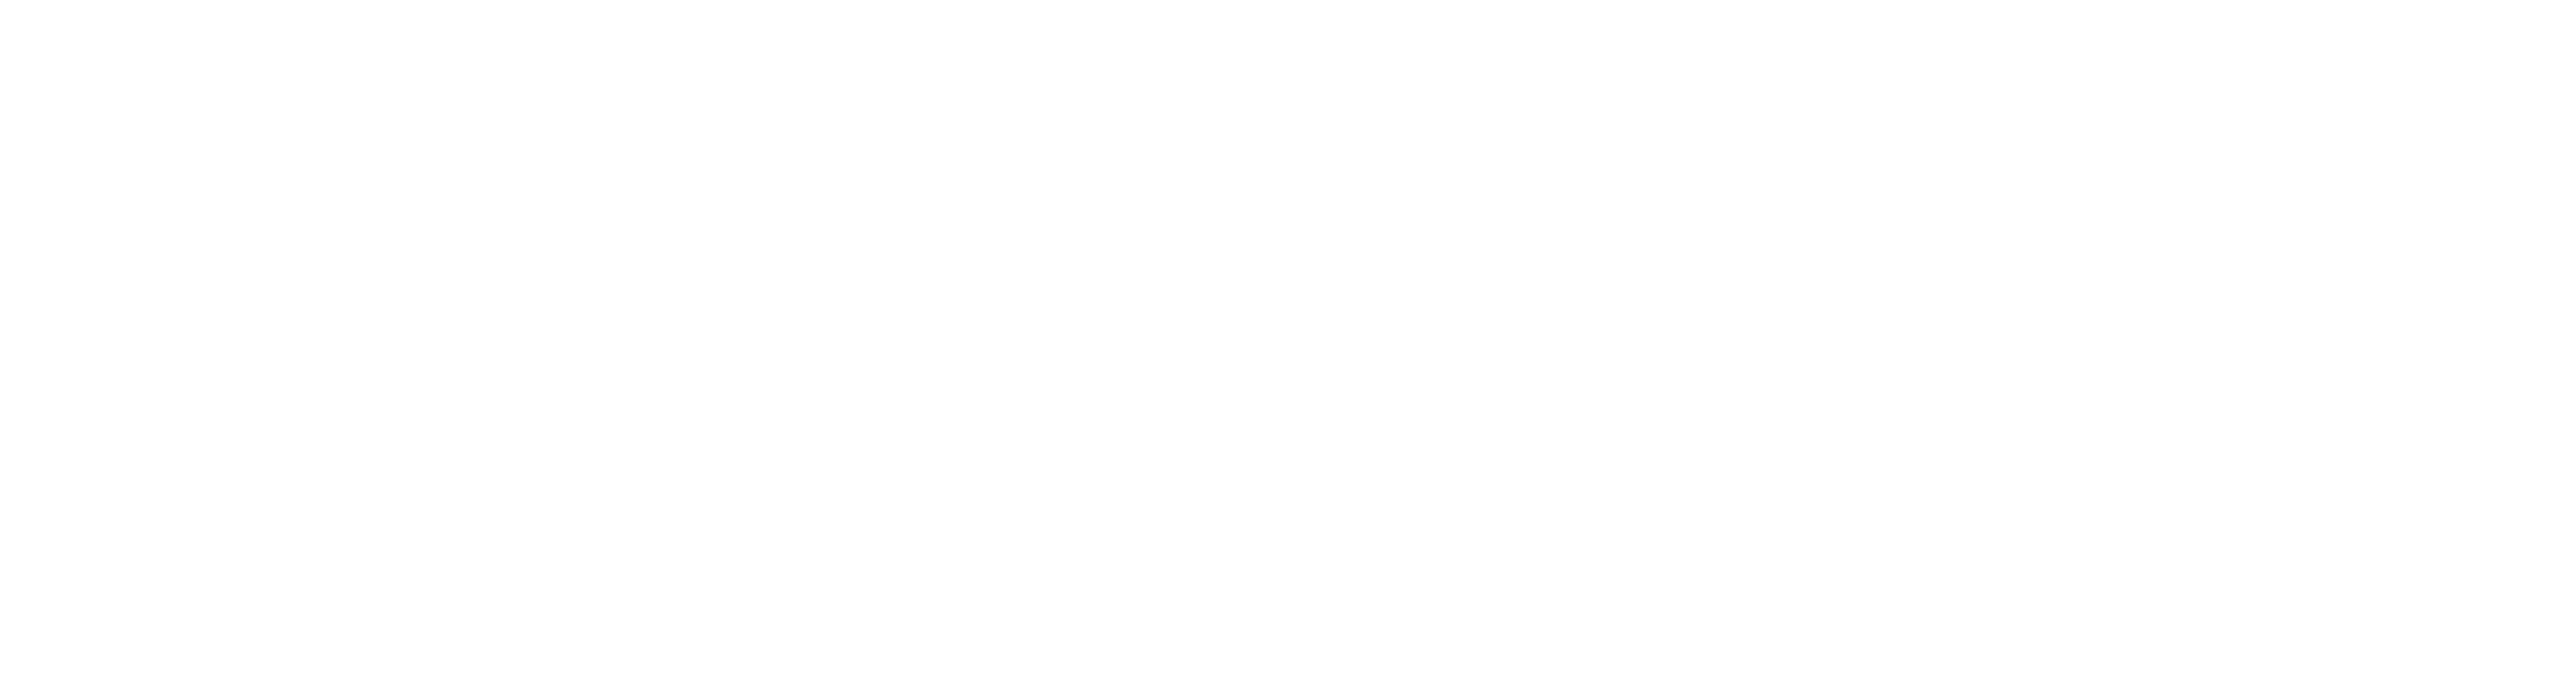 Rosie Stracuzza Real Estate Agent London Ontario Logo